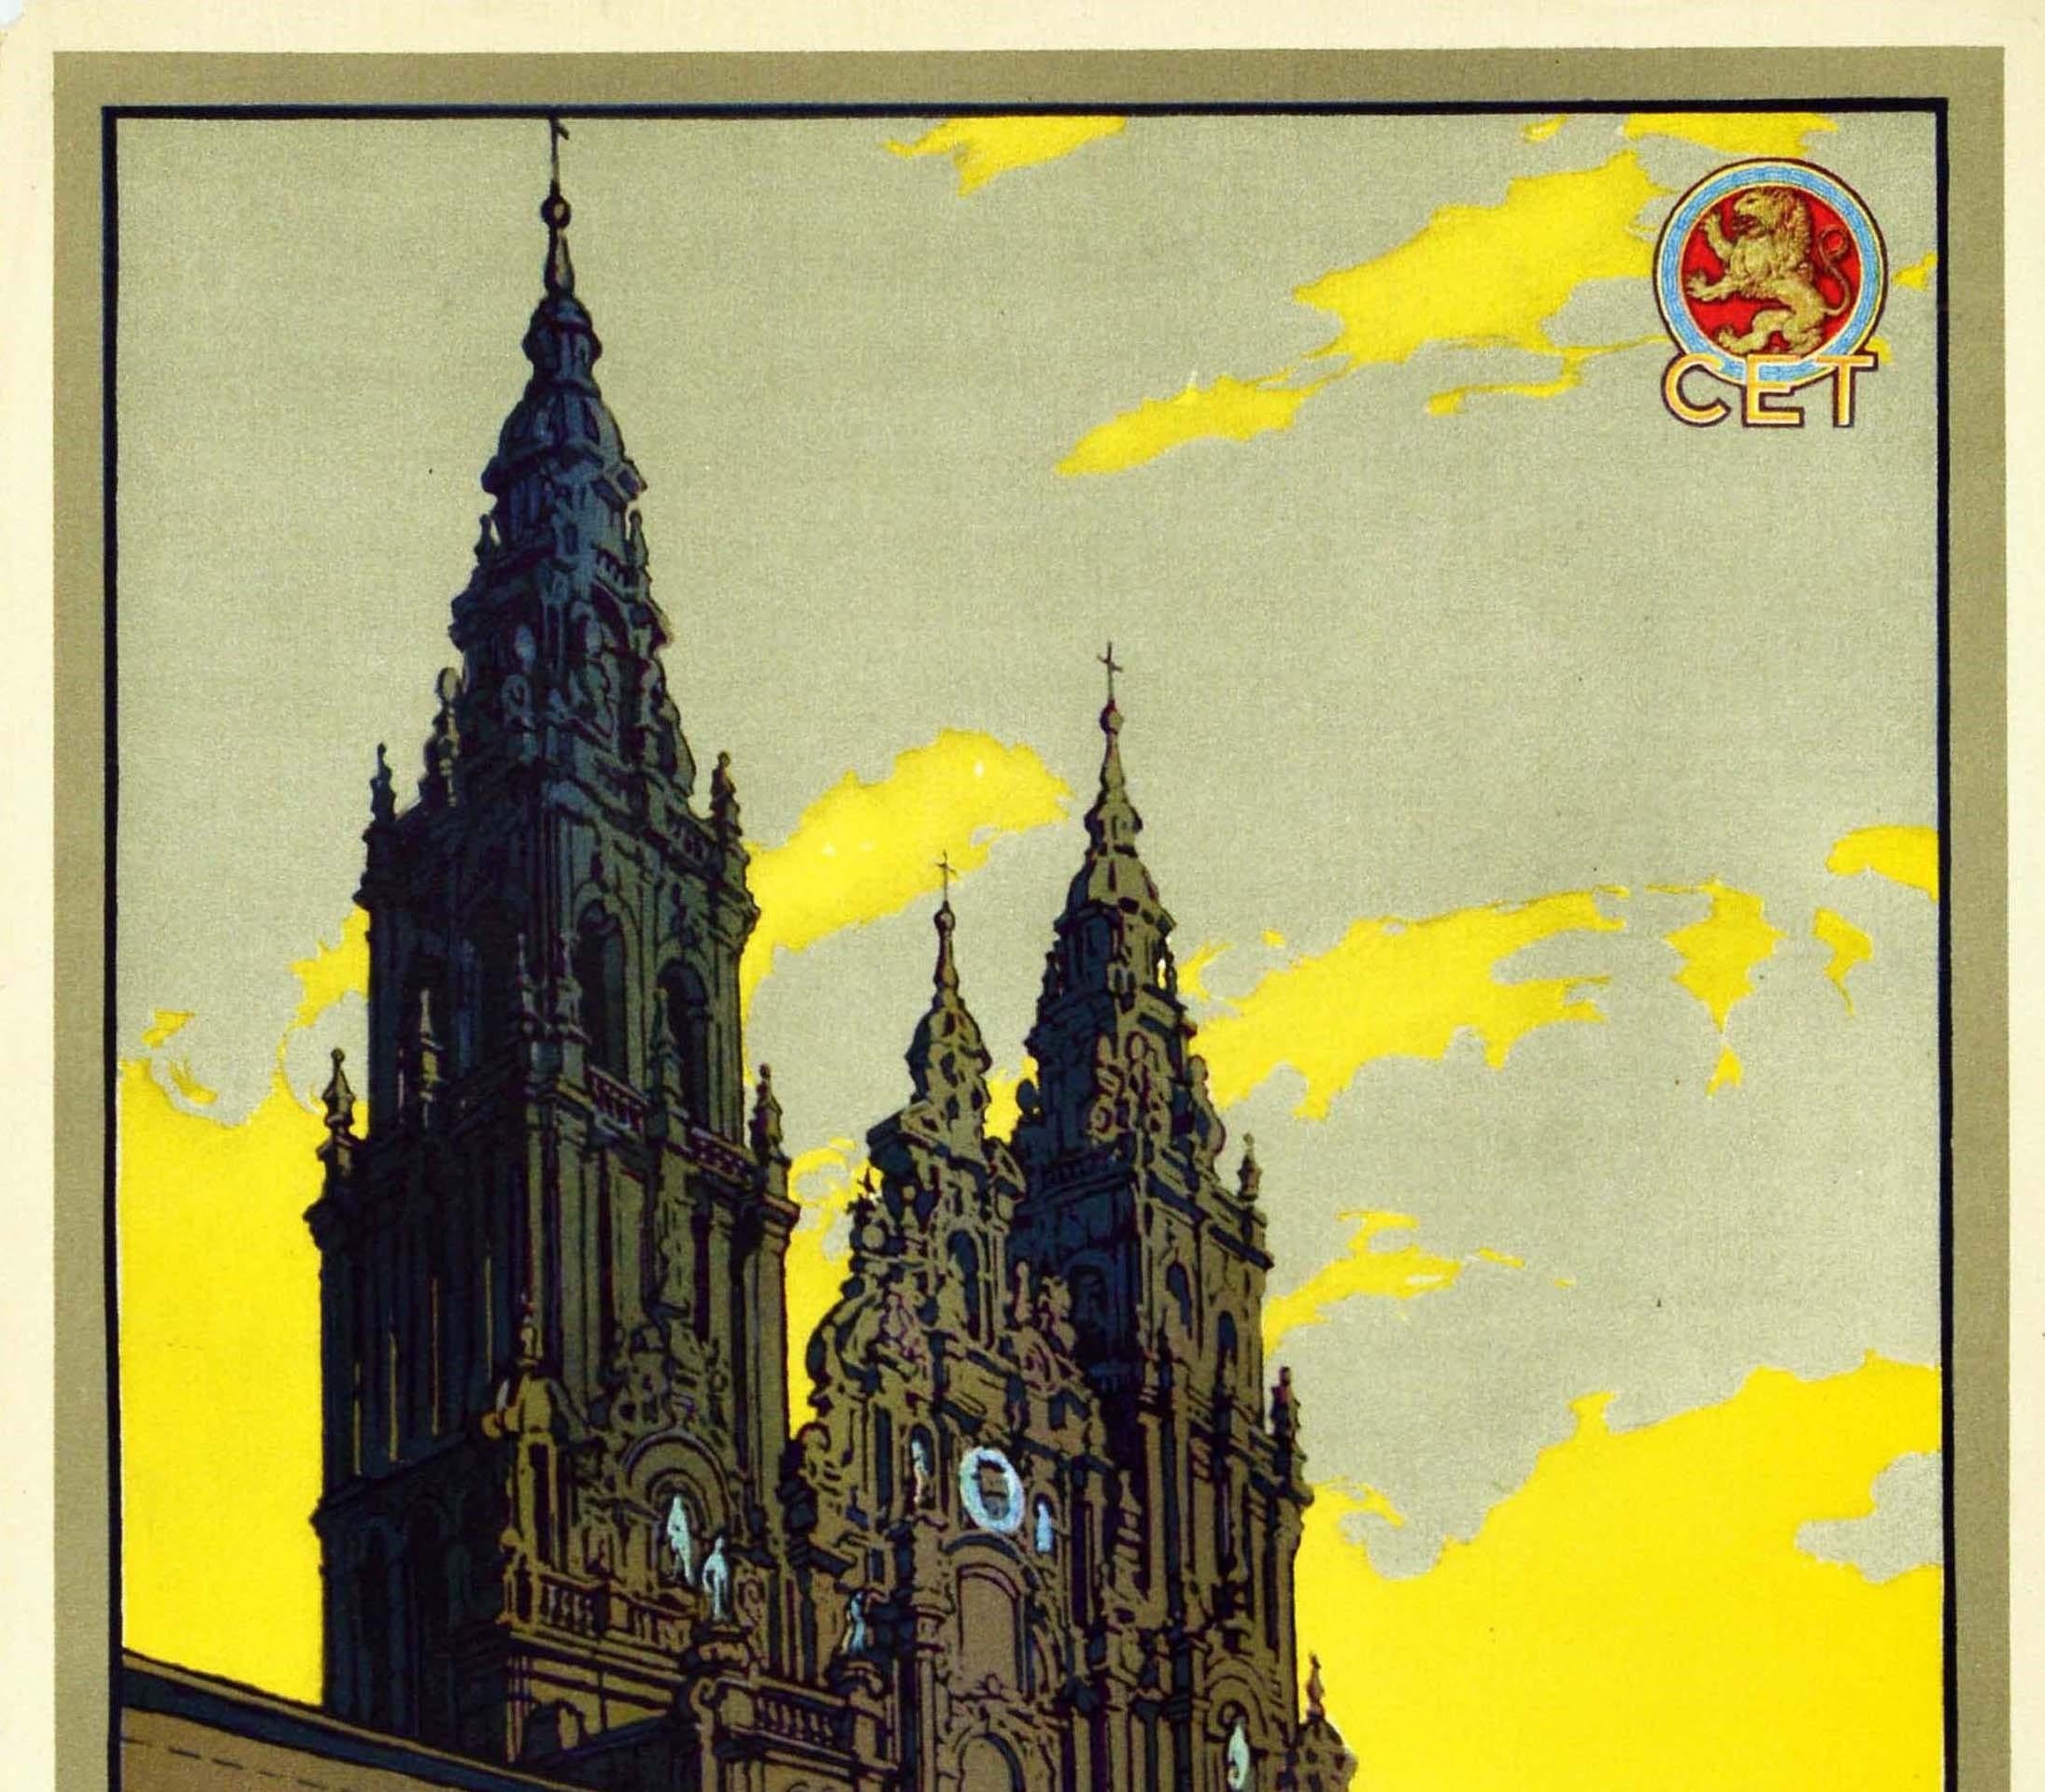 Original Vintage Travel Poster Visitad Santiago De Compostela Cathedral Basilica - Print by J. Segrelles